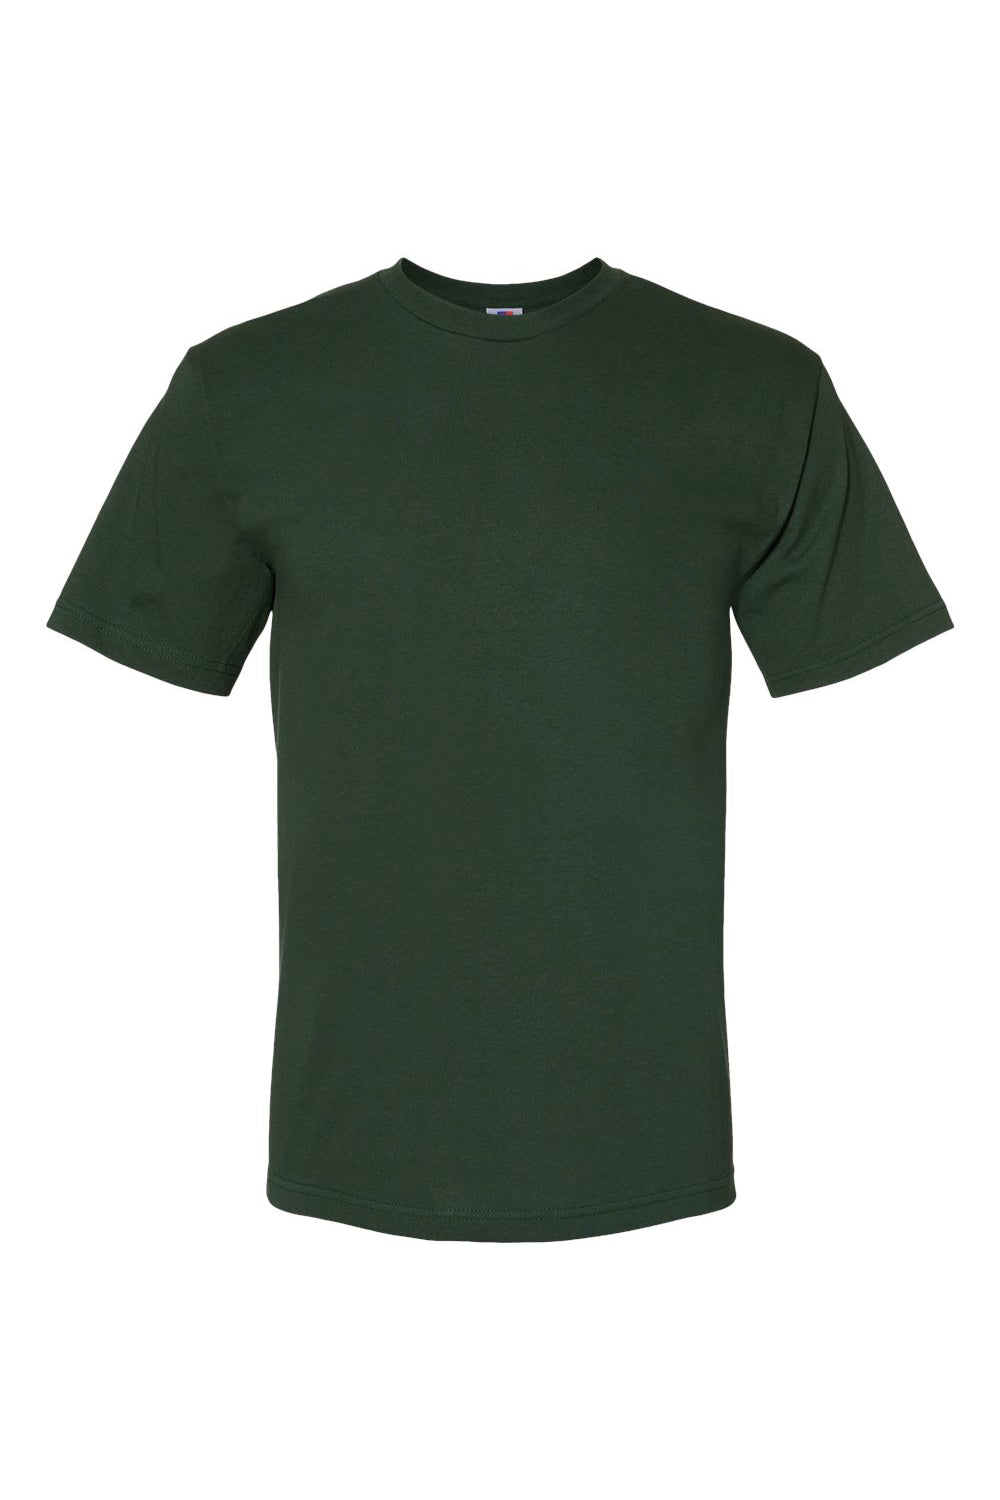 Bayside BA5040 Mens USA Made Short Sleeve Crewneck T-Shirt Hunter Green Flat Front